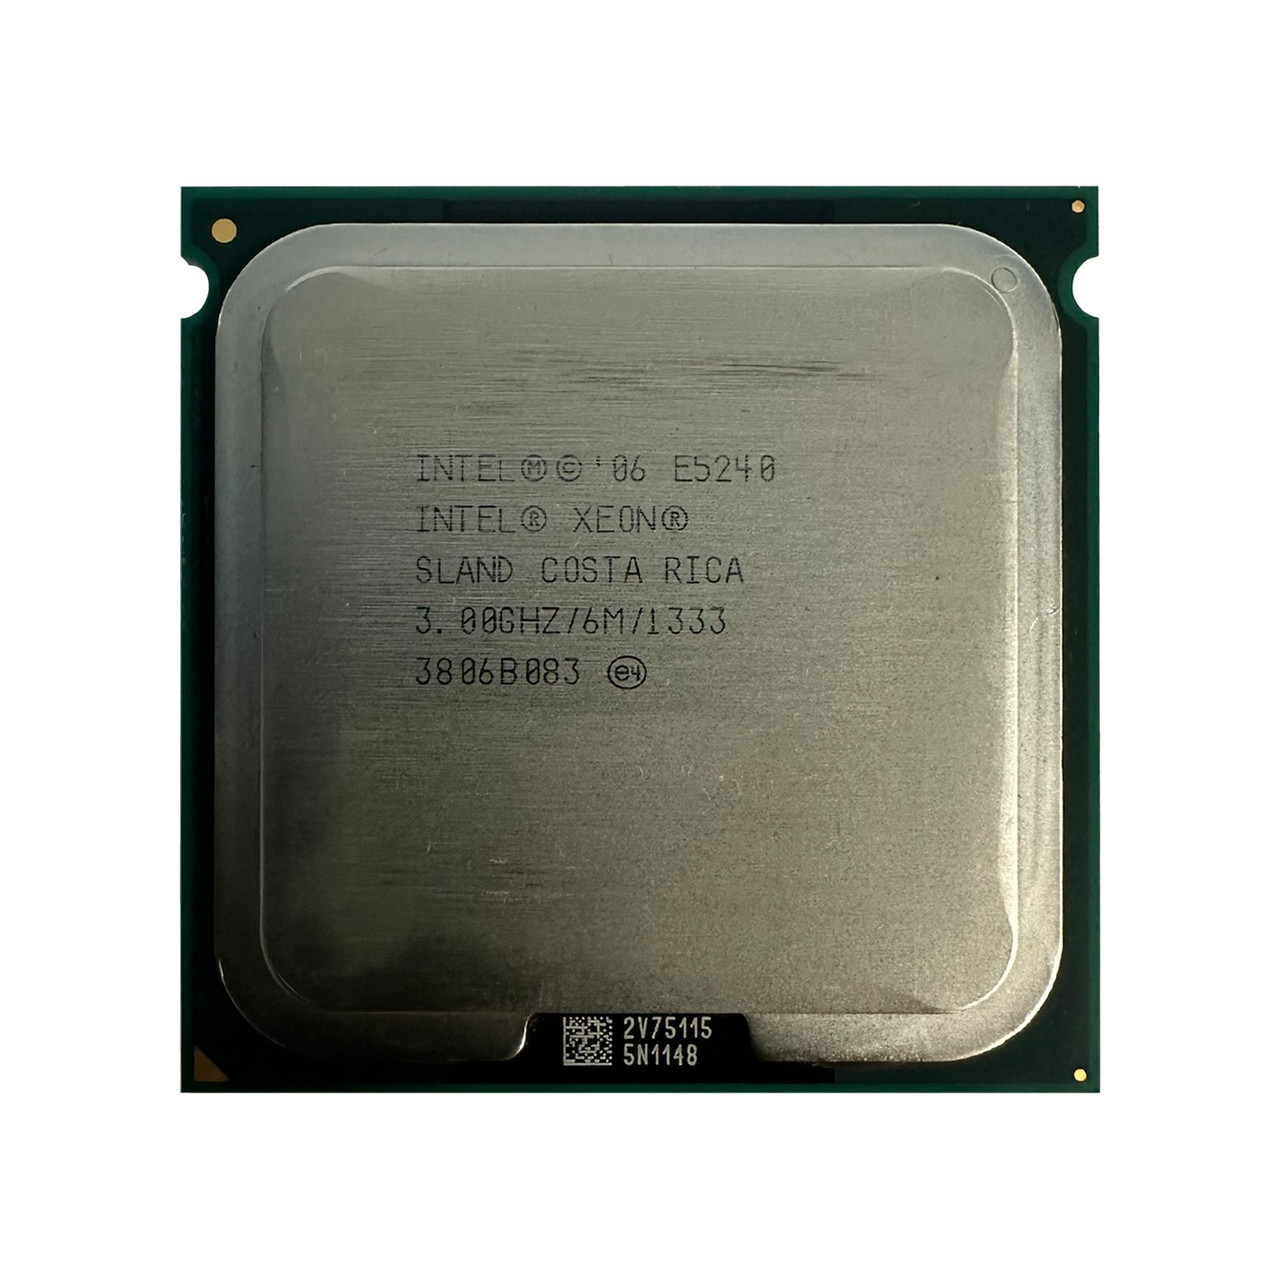 Intel SLAND Xeon E5240 DC 3.0GHz 6MB 1333MHz Processor